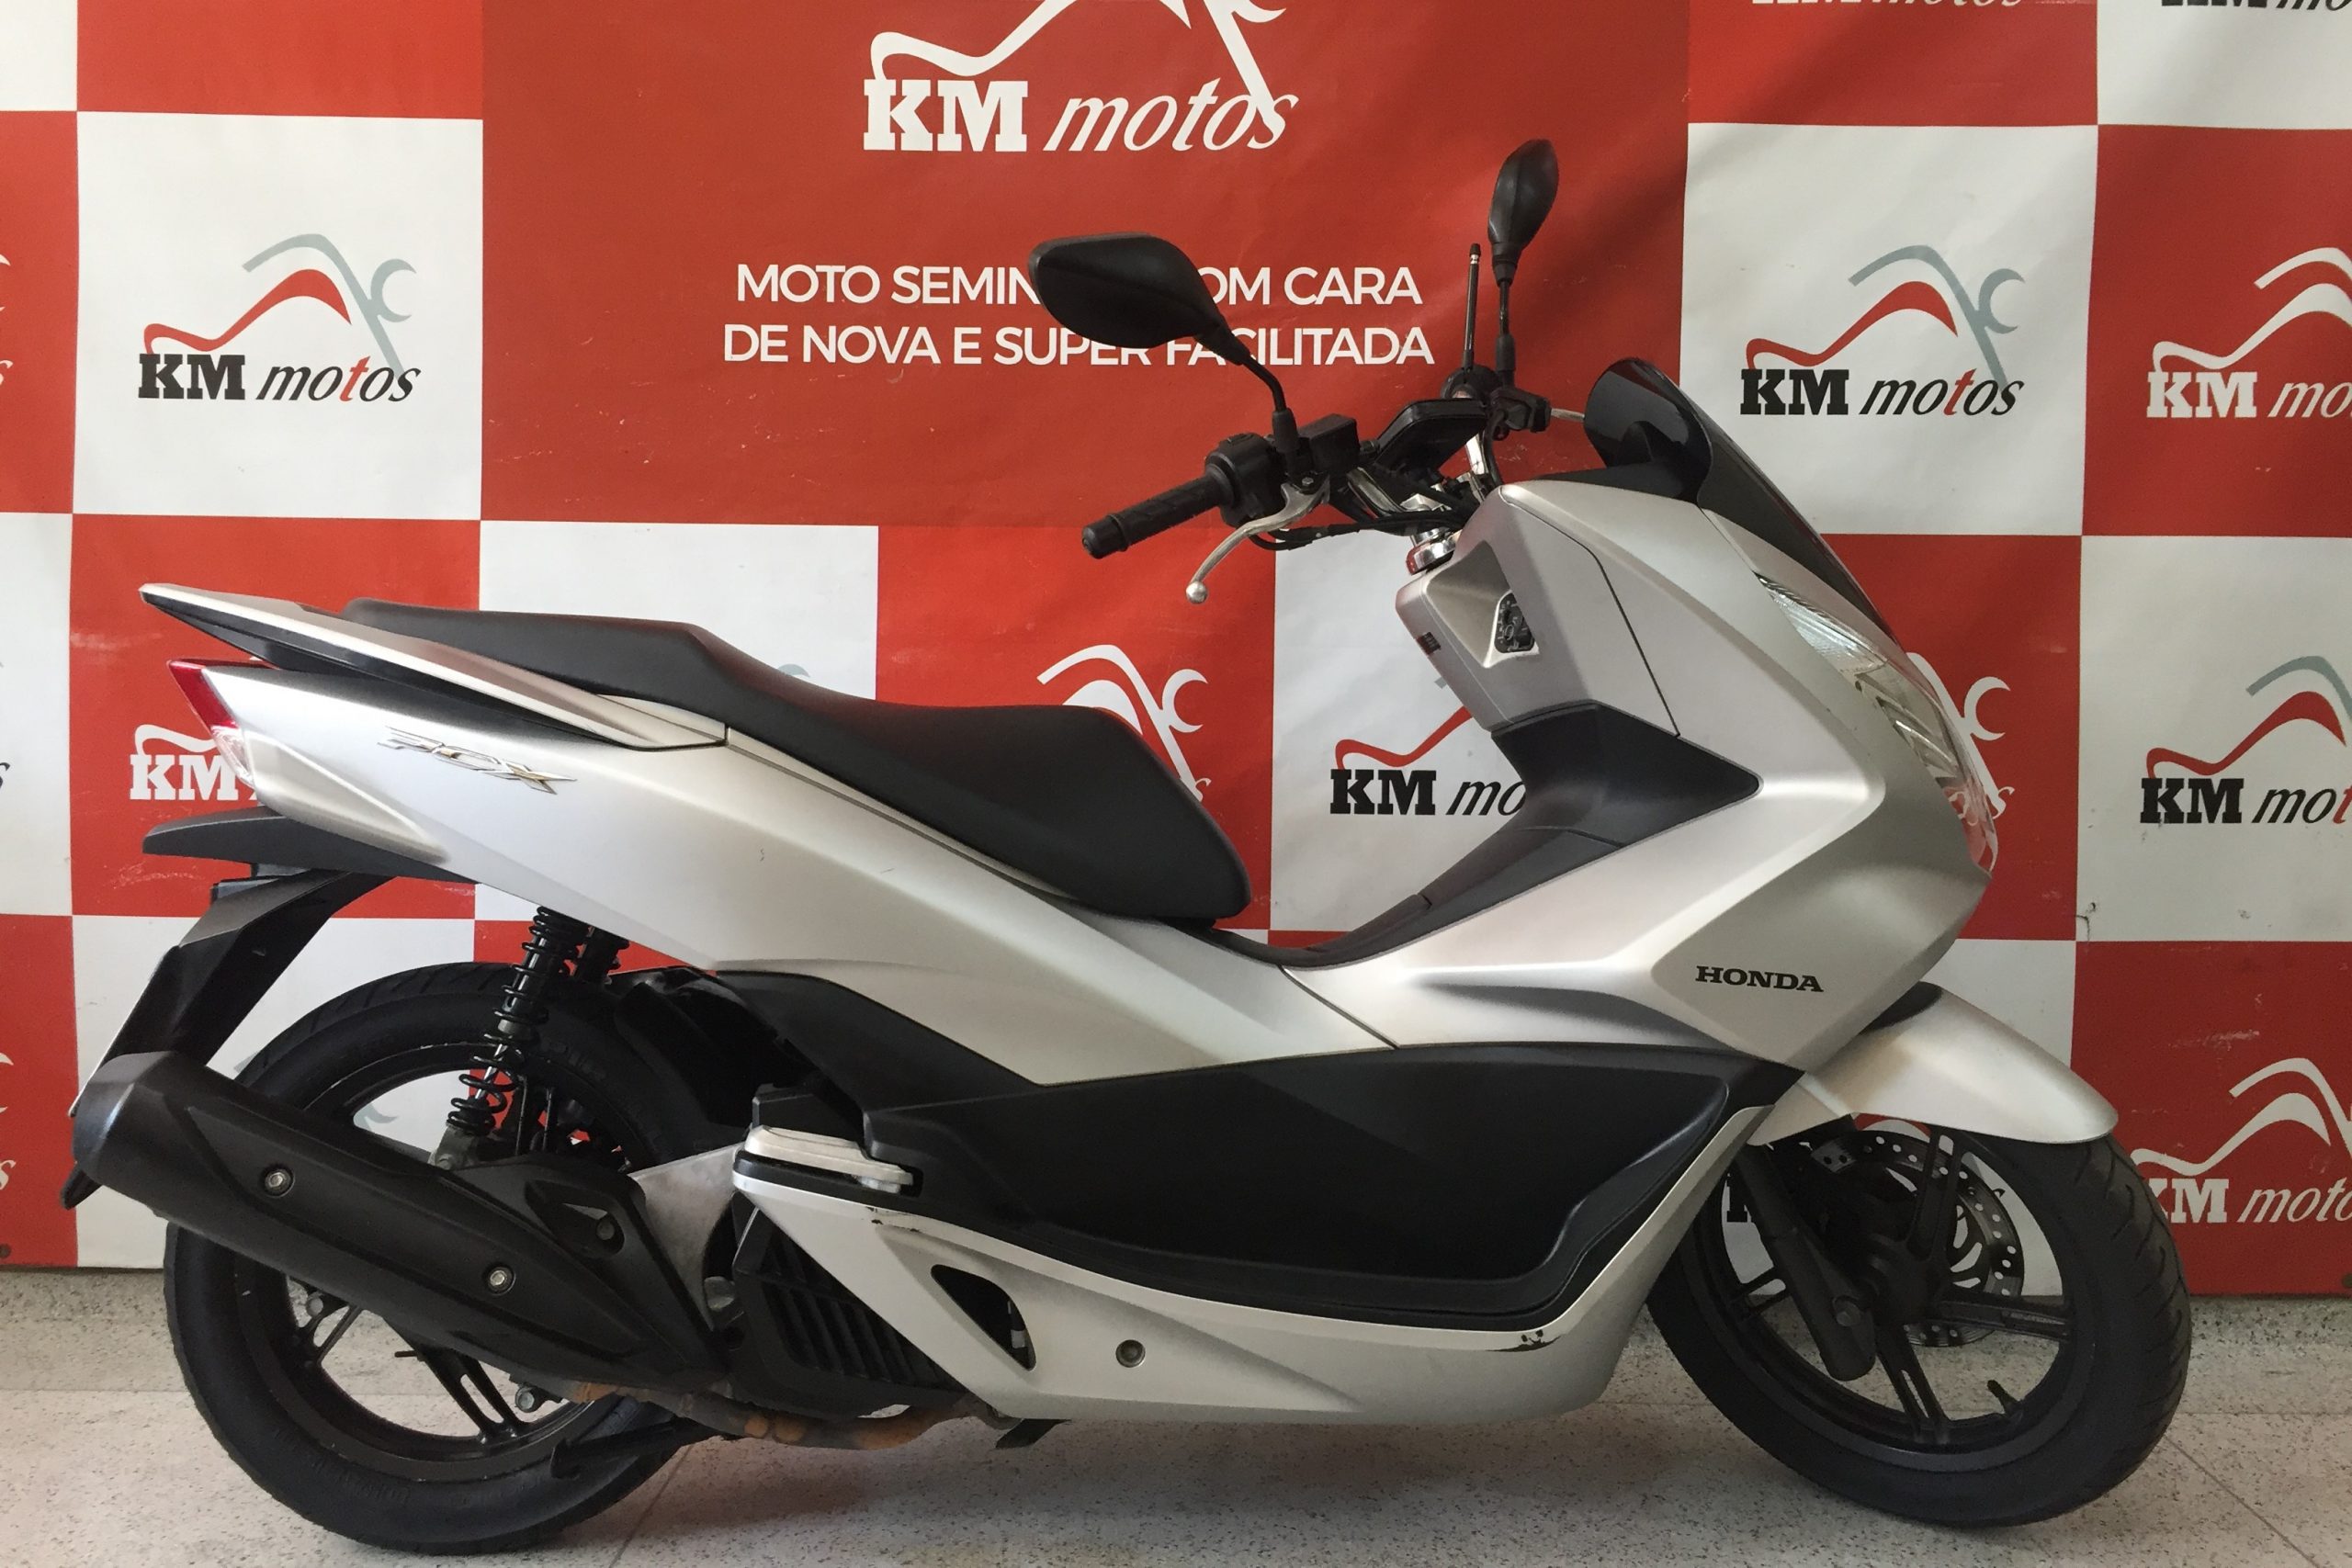 Honda Pcx 150 Prata 2017 Km Motos Sua Loja De Motos Semi Novas 7786